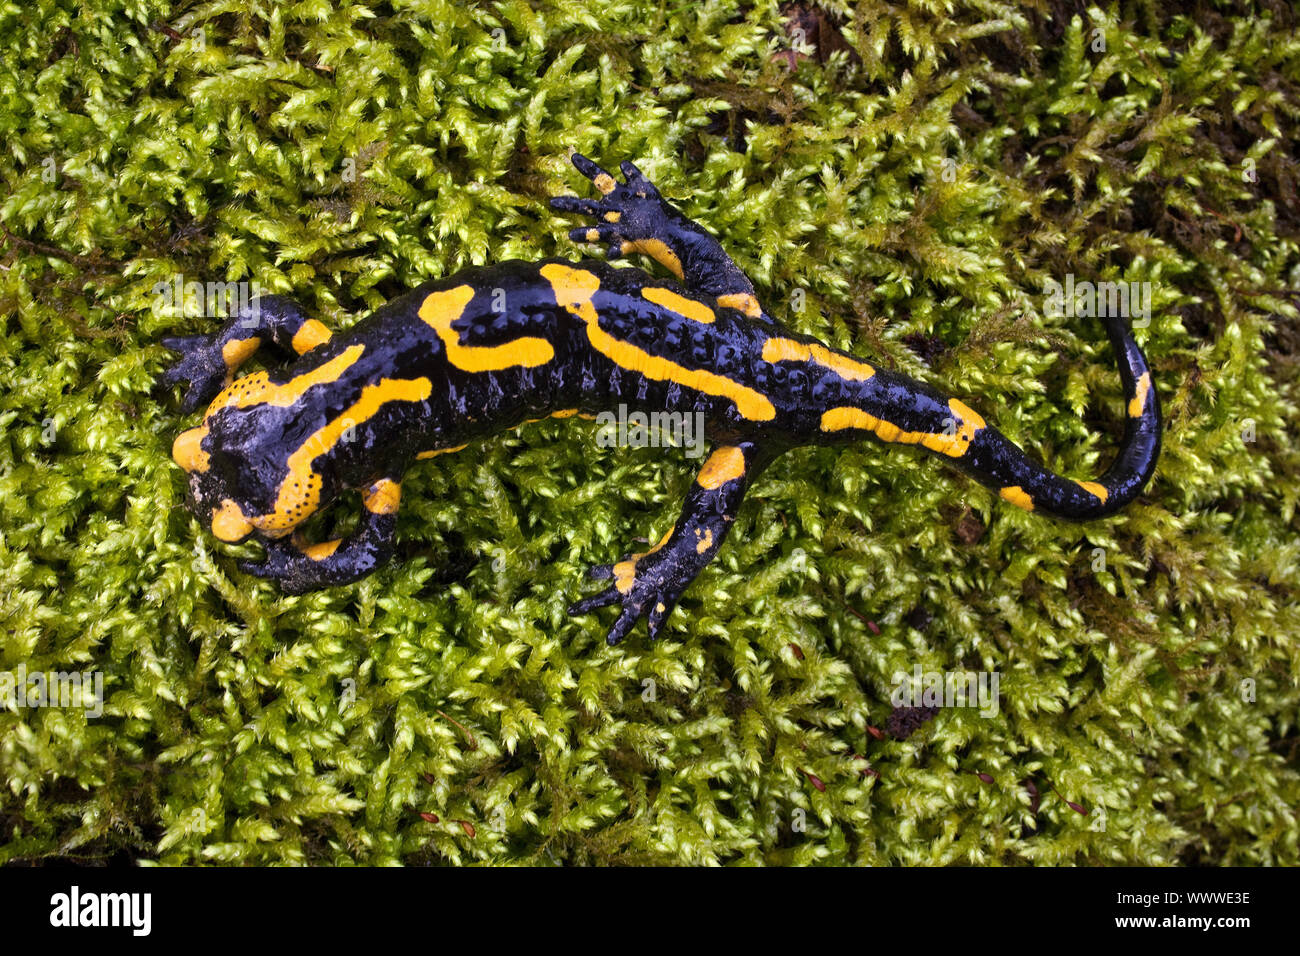 European fire salamander (Salamandra salamandra), top view, sitting on moos, Witten, Germany Stock Photo